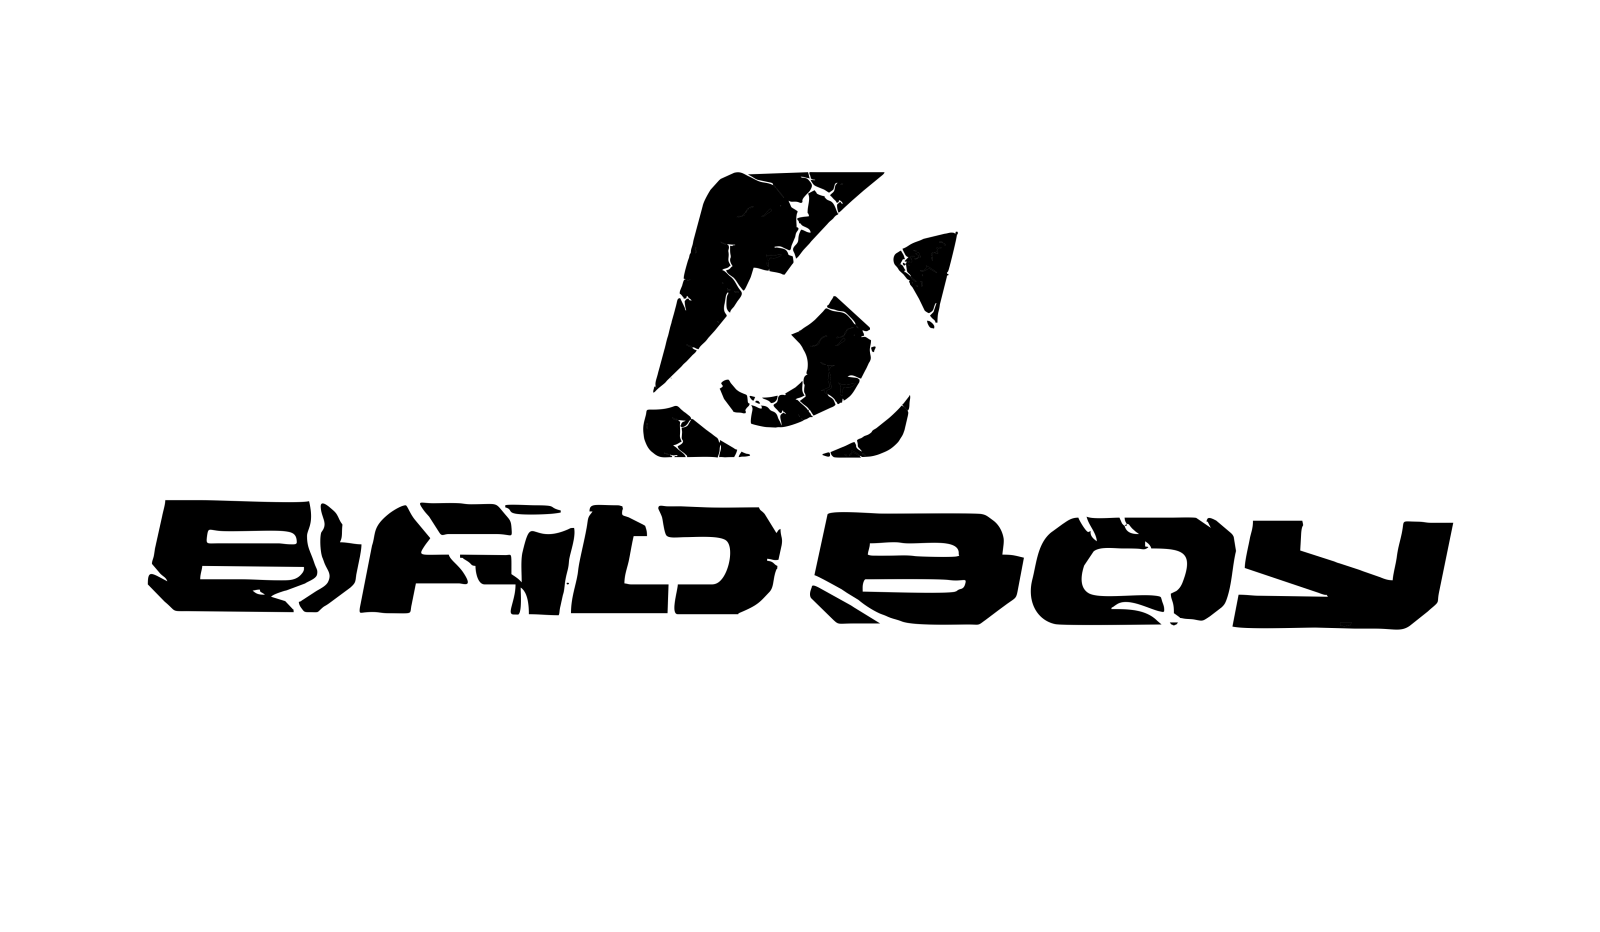 Bad Boy : Brand Short Description Type Here.